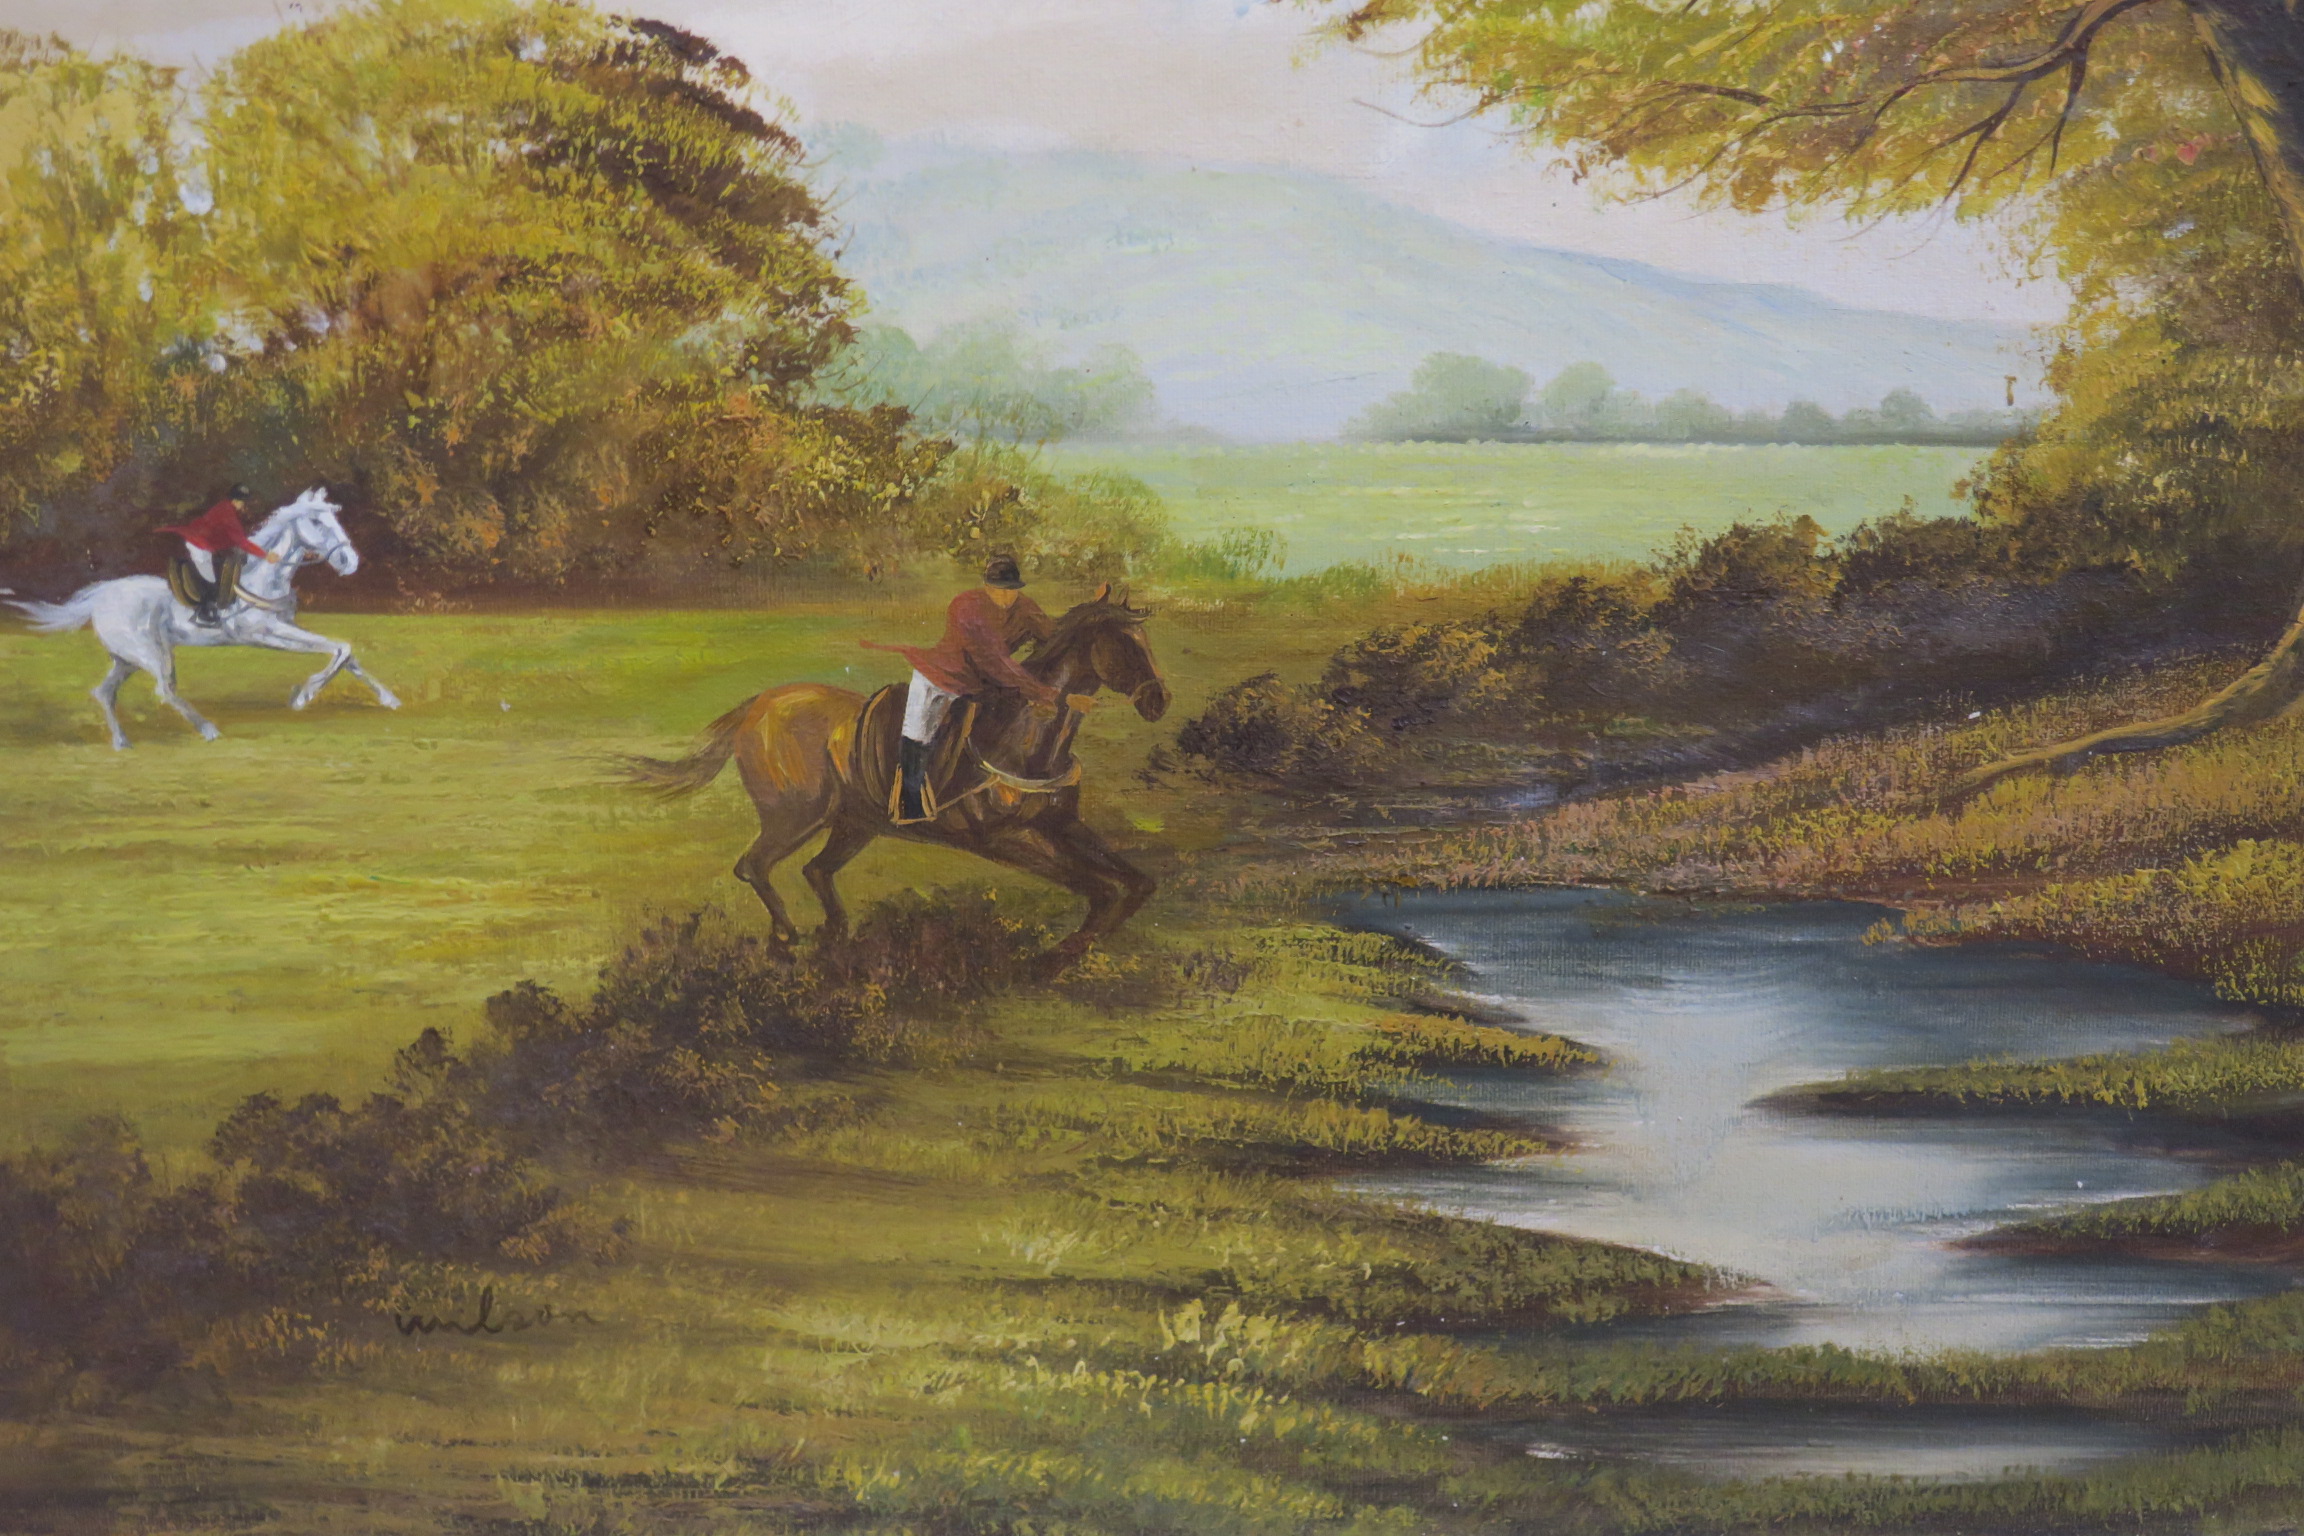 WILSON Hunting Scene Oil on canvas Signed lower left 42cm (h) x 49cm (w)